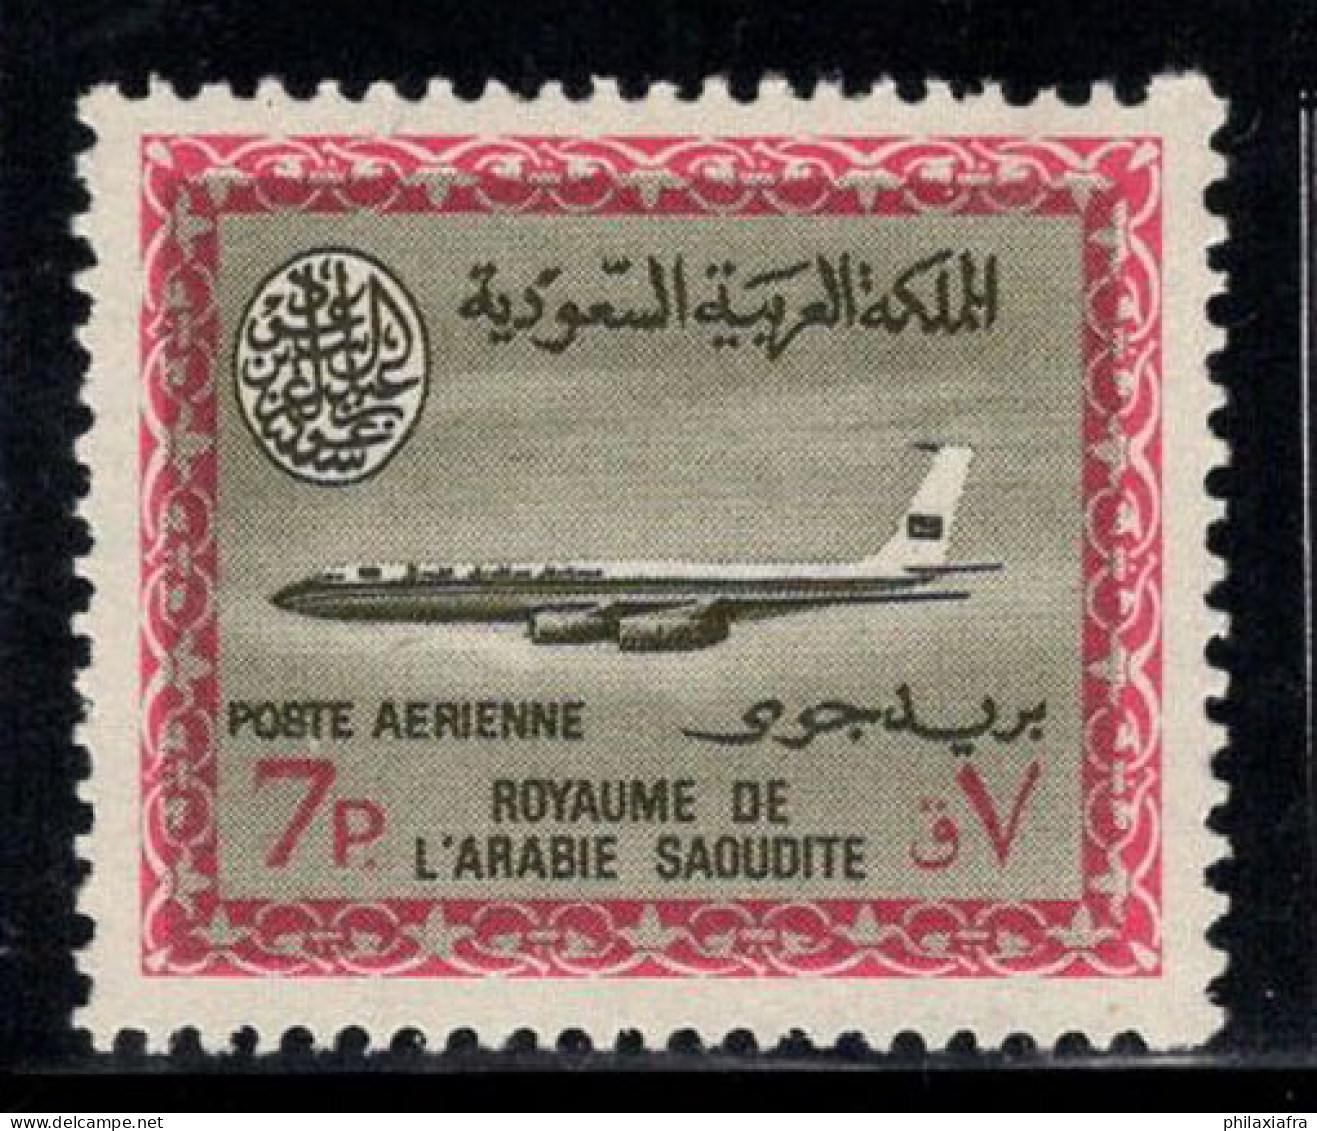 Arabie Saoudite 1965-72 Mi. 248 Neuf ** 100% Poste Aérienne 7 Pia, Boeing 720 B - Saudi-Arabien